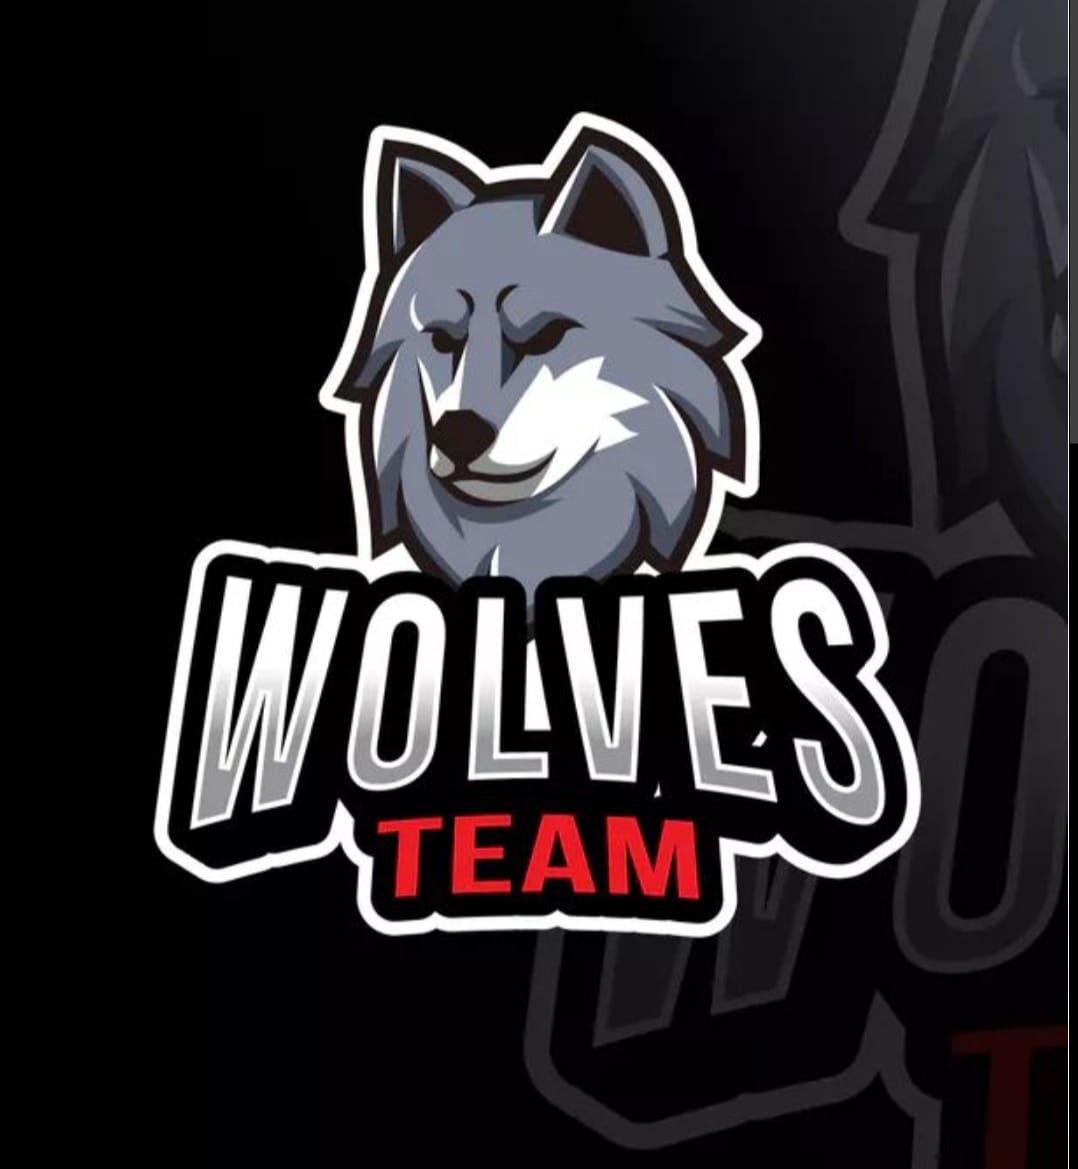 Team wolves